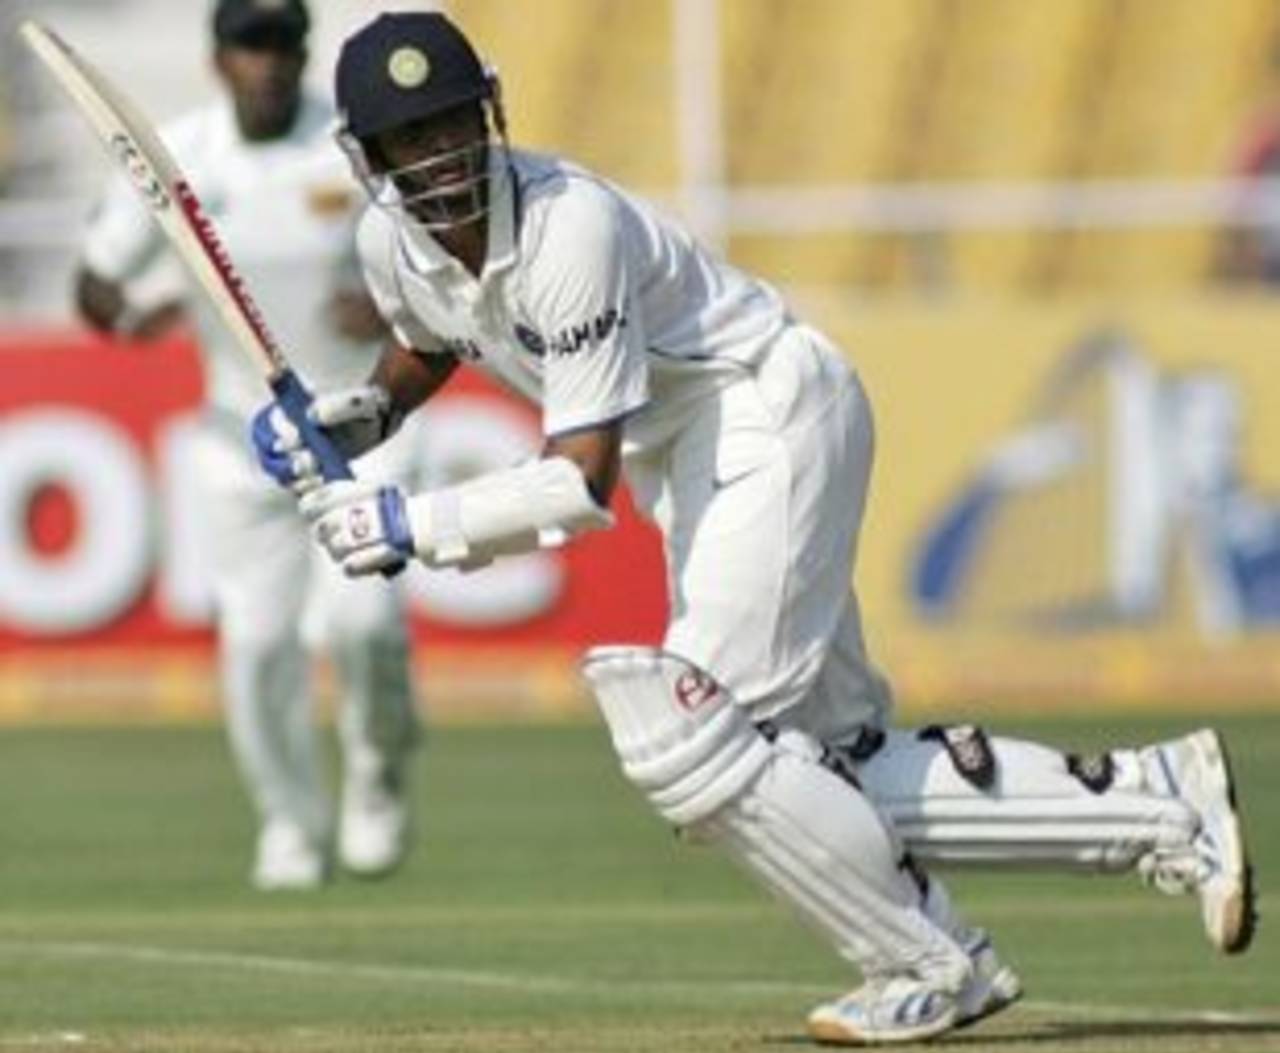 Rahul Dravid clips the ball past short leg, India v Sri Lanka, 1st Test, Ahmedabad, 1st day, November 16, 2009